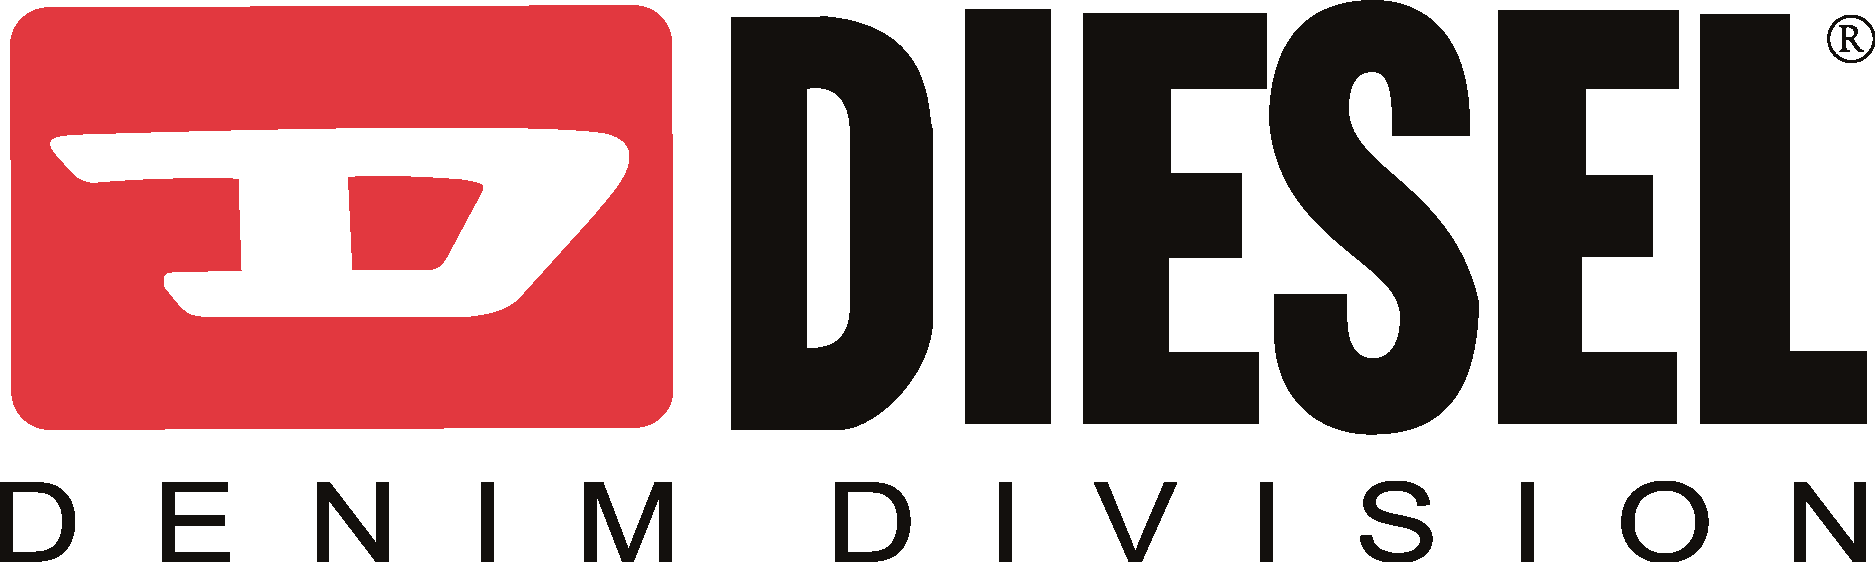 Detroit Diesel Logo - Detroit Diesel Logo Png, Transparent Png -  1300x292(#3855536) - PngFind